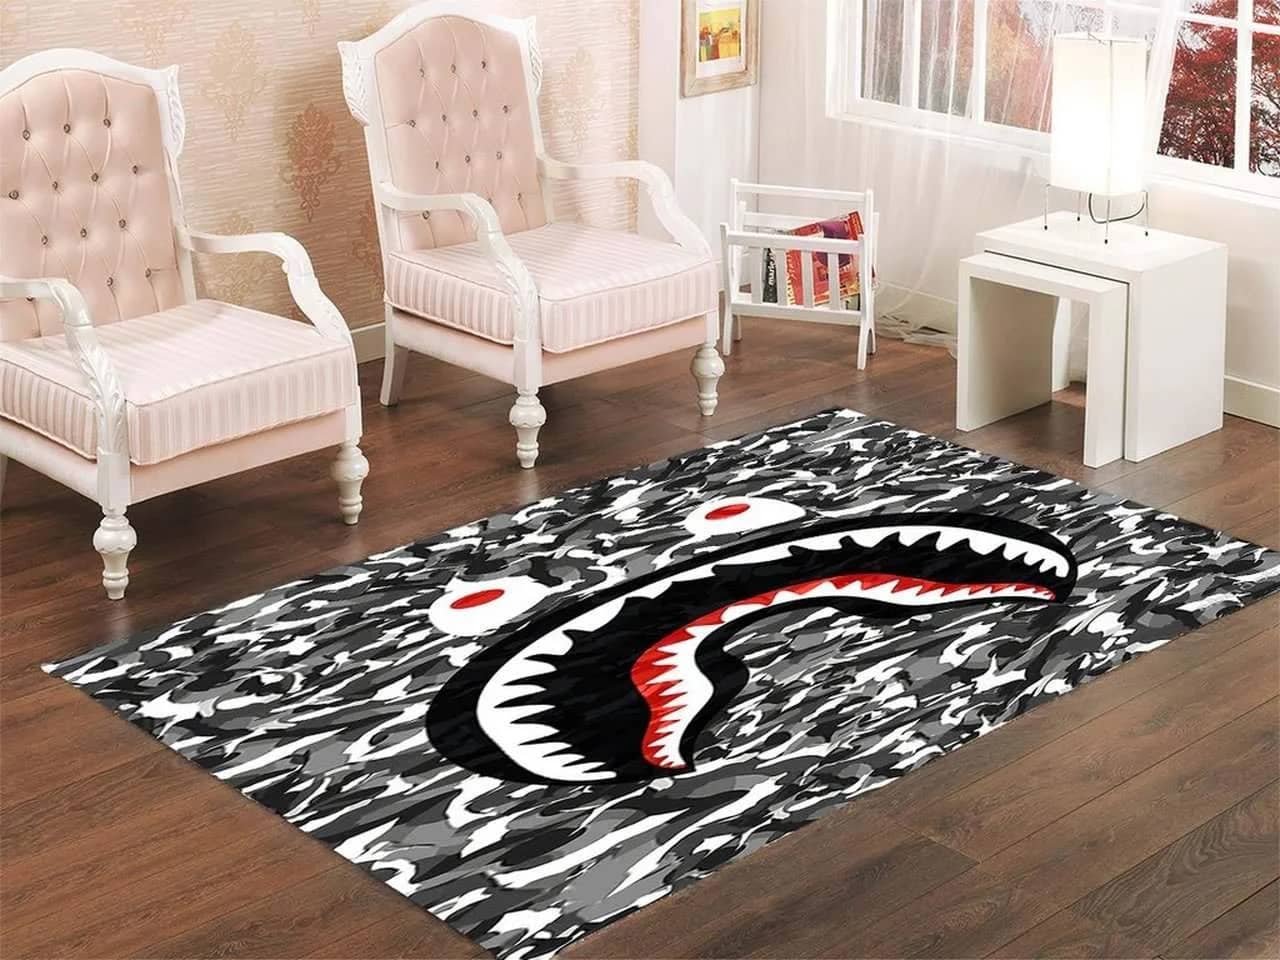 Bape Shark Black Army Pattern Area Limited Edition Amazon Best Seller Sku 267073 Rug